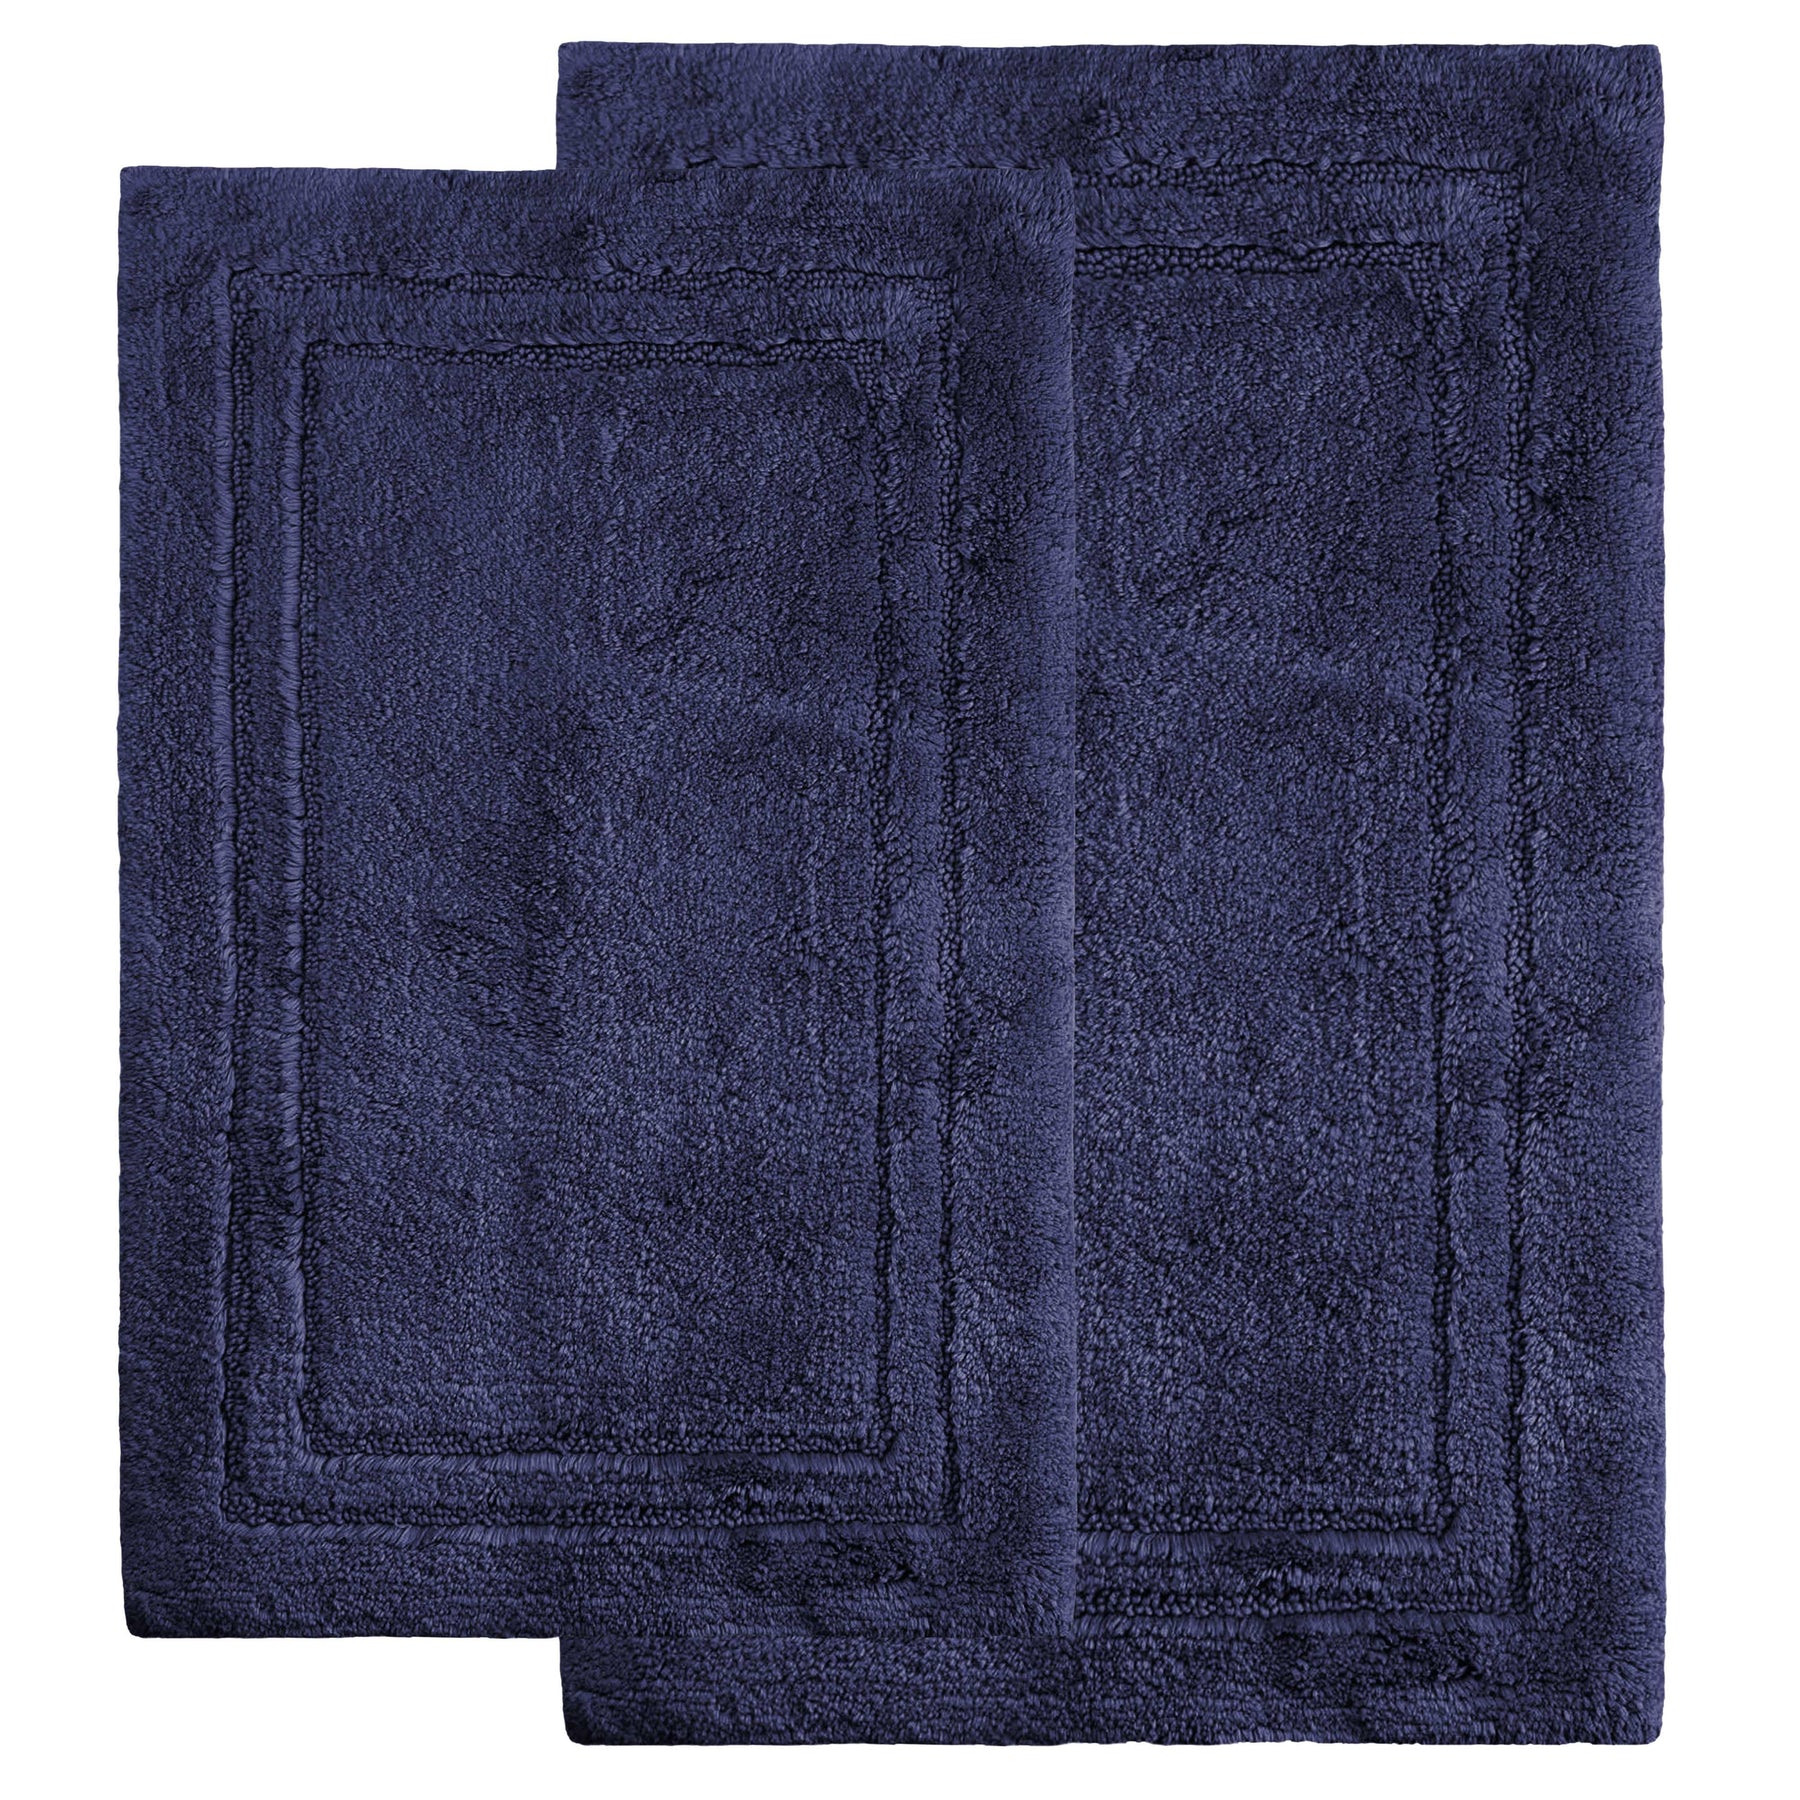 Non-Slip Absorbent Assorted Solid 2-Piece Bath Rug Set - Navy Blue